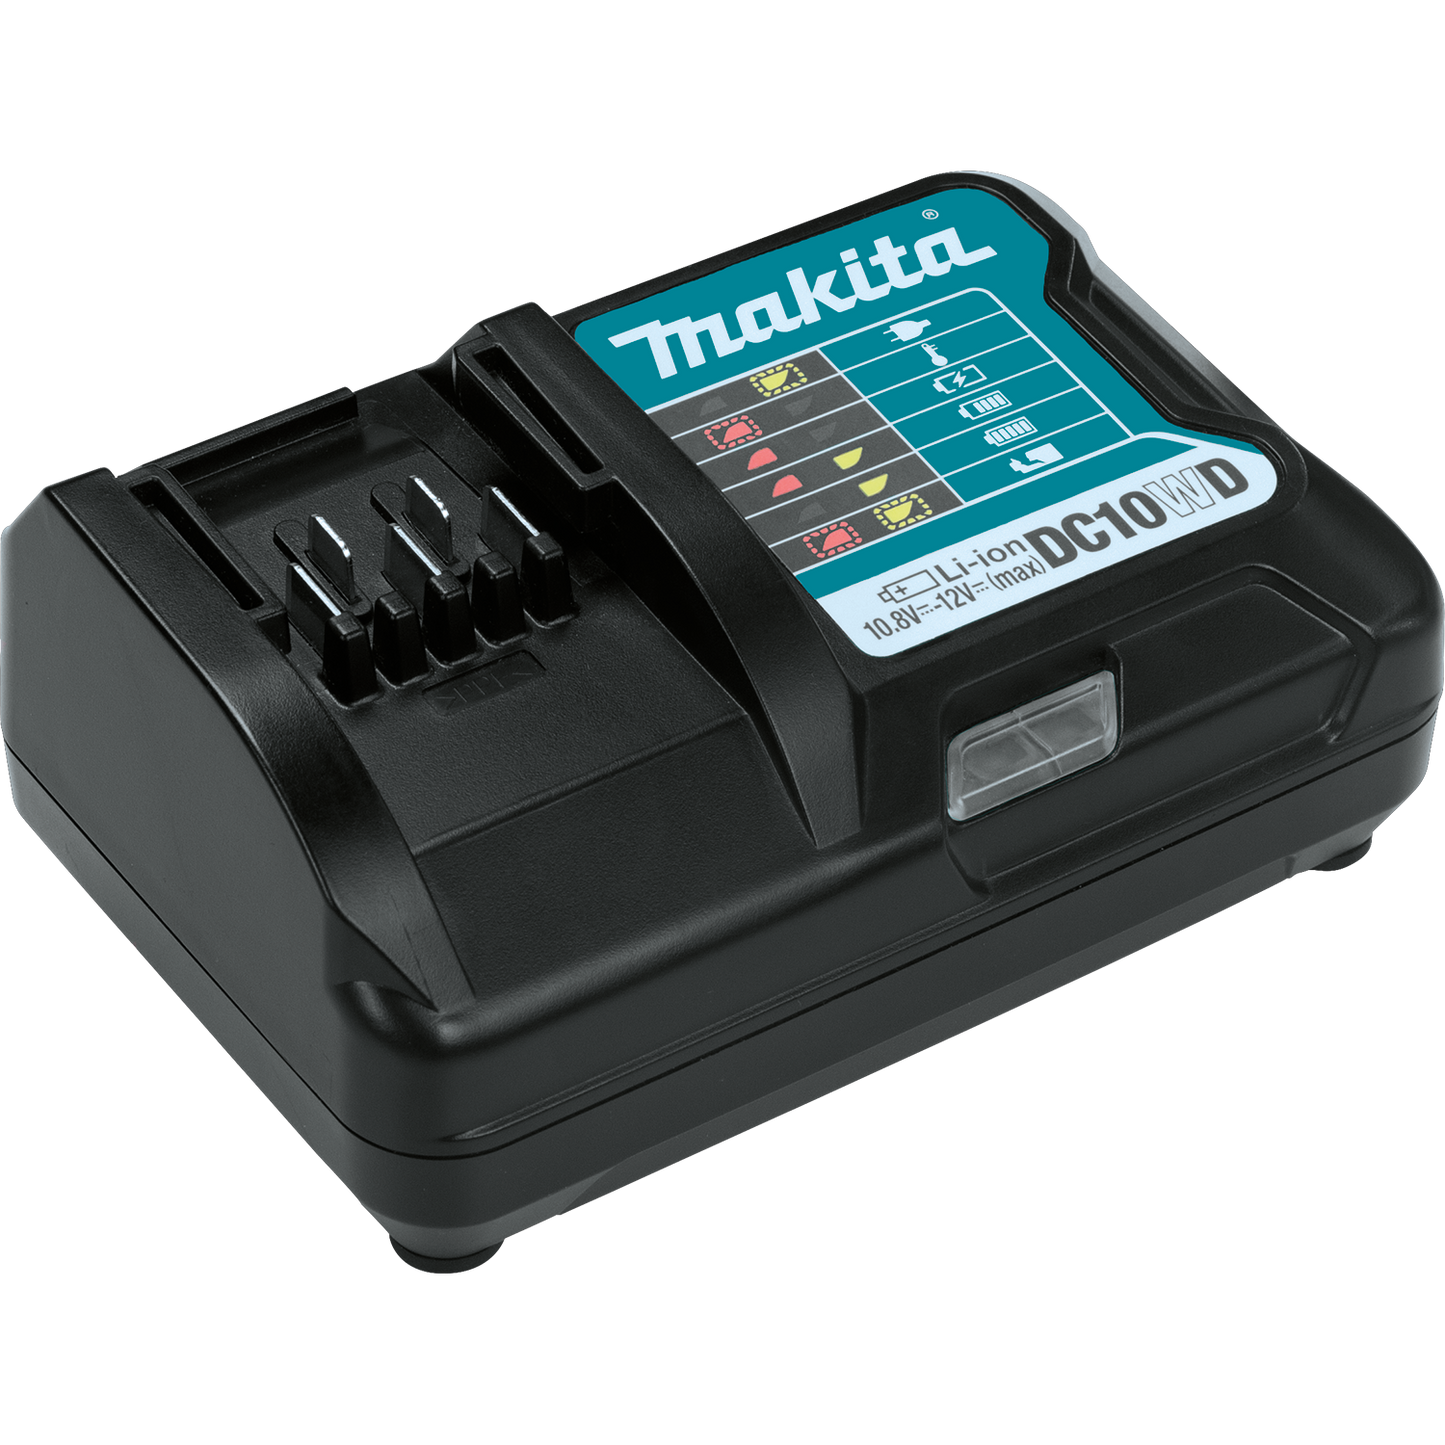 Makita 12V max CXT Lithium‑Ion Cordless  3/8 Inch Driver‑Drill Kit 2.0Ah Factory Serviced